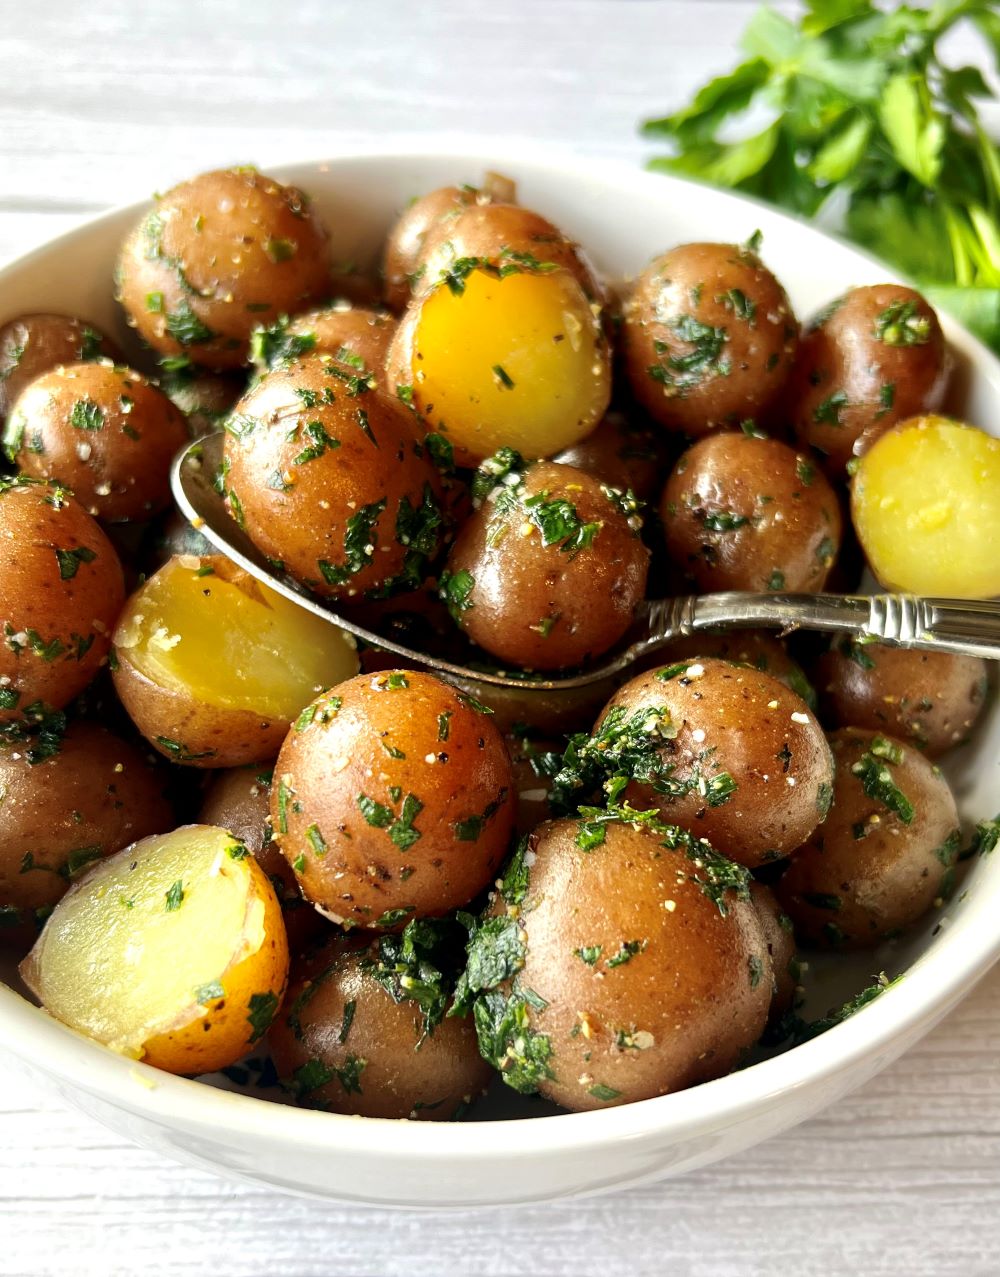 Boiled Baby Potatoes - The Menu Maid